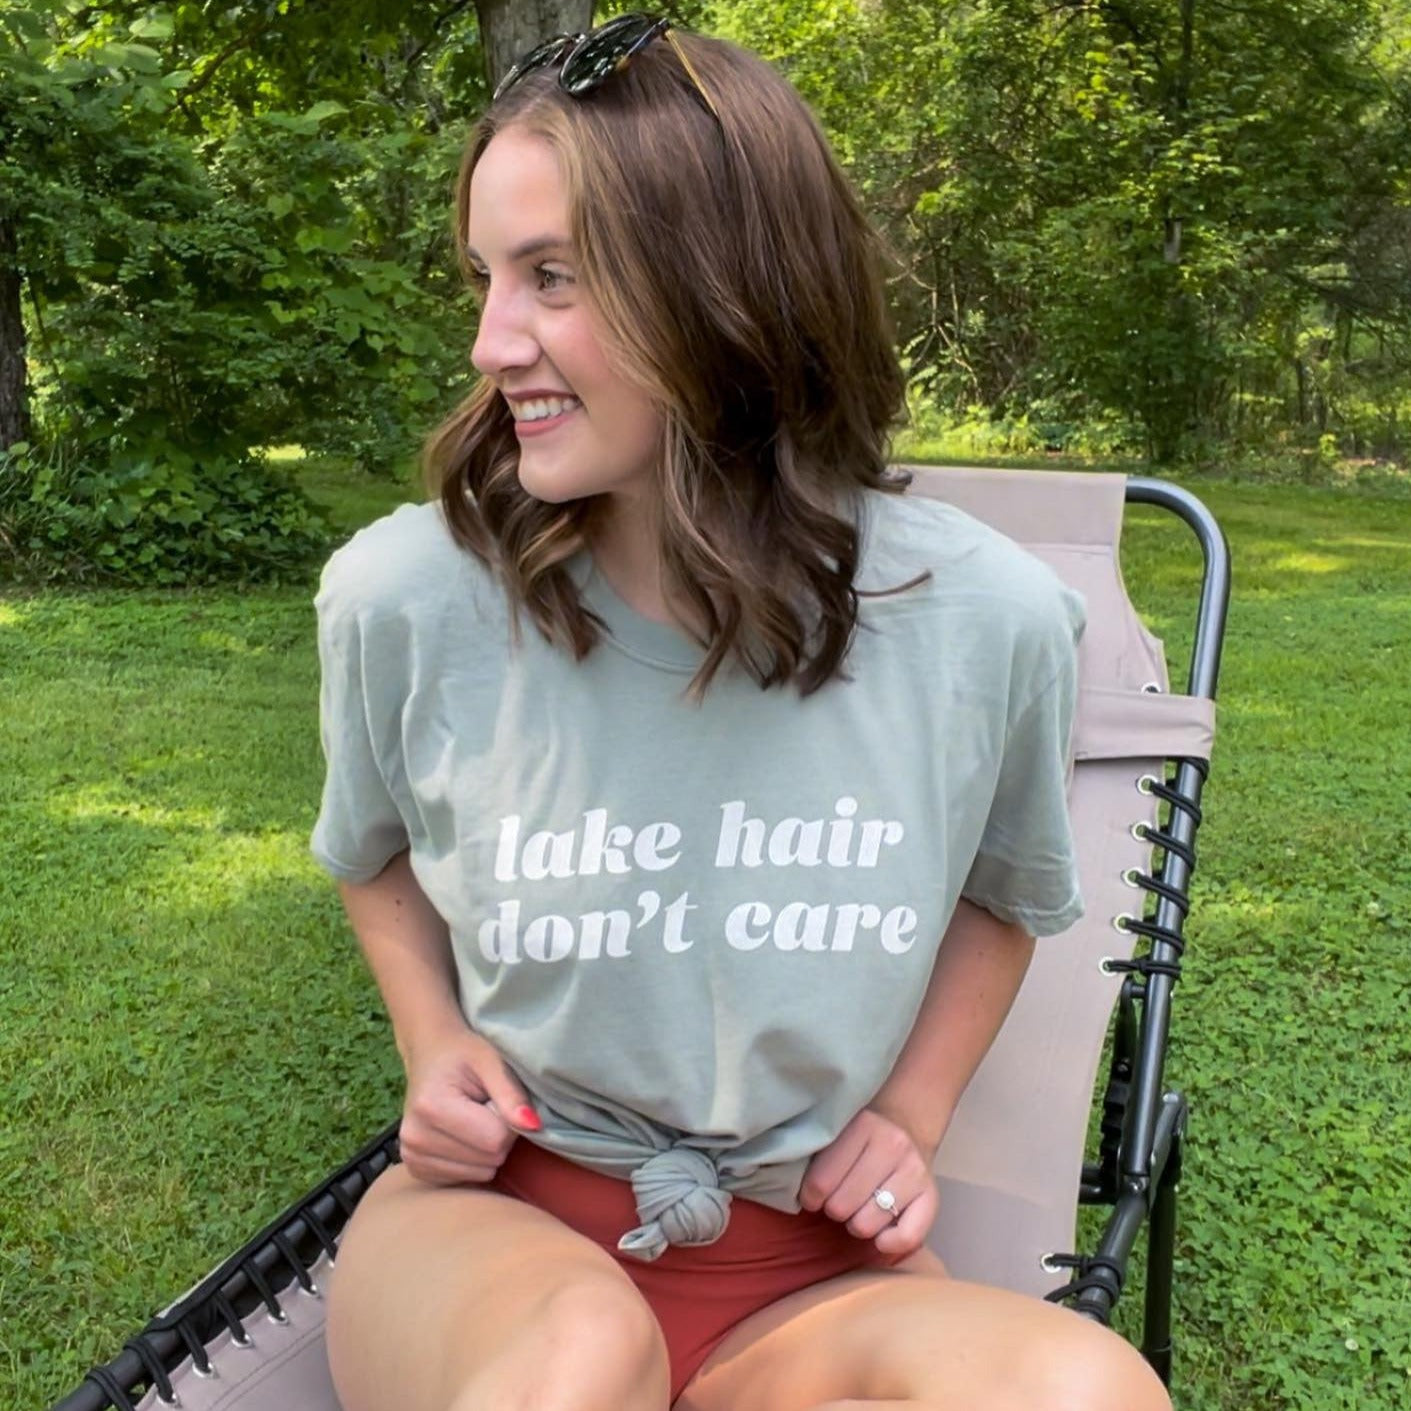 Lake Hair Don't Care